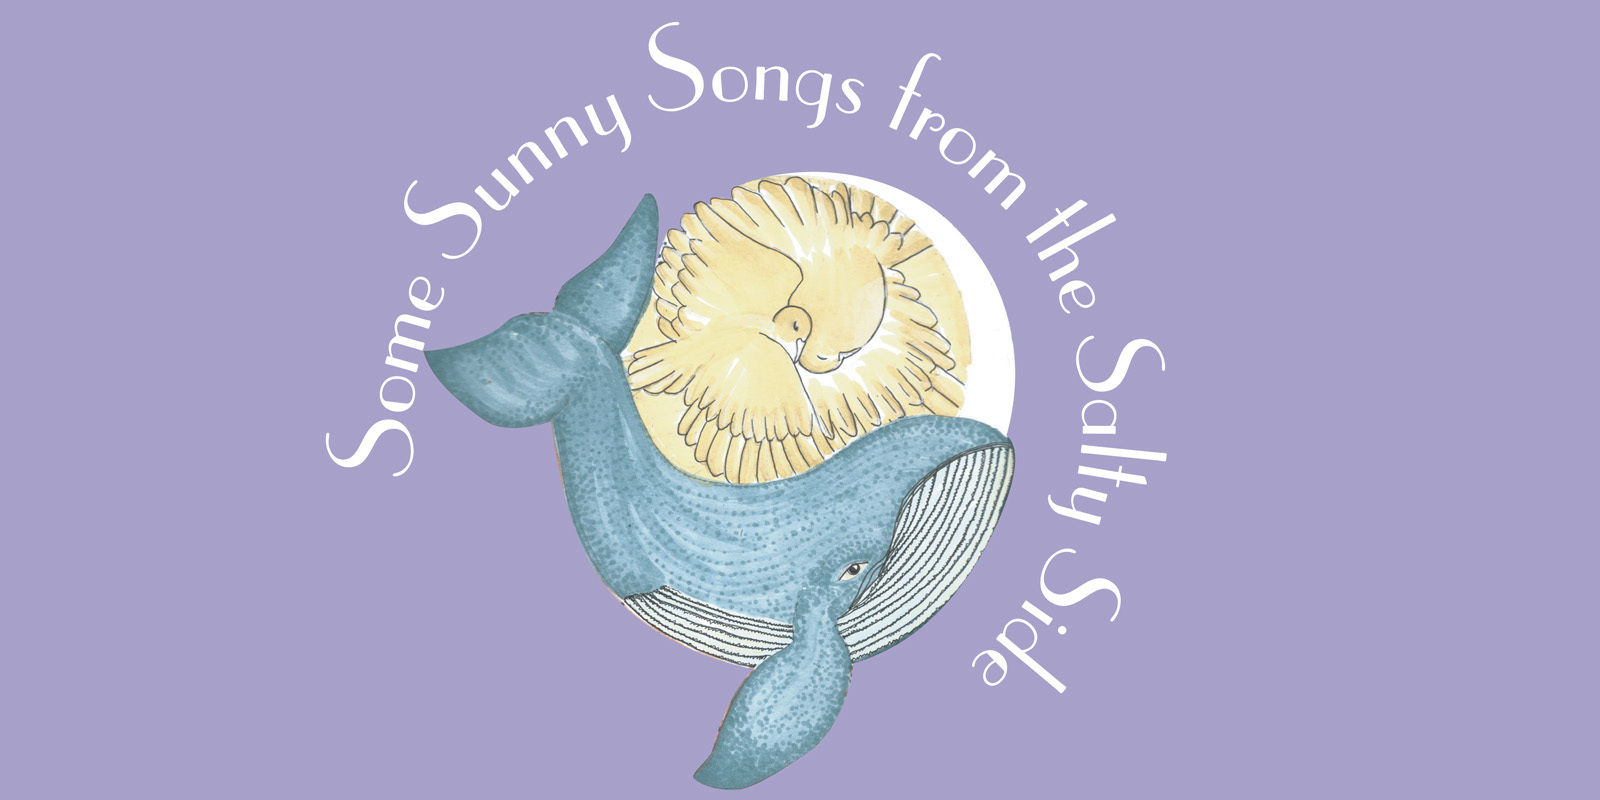 Sunny Songs Web 2022 copy